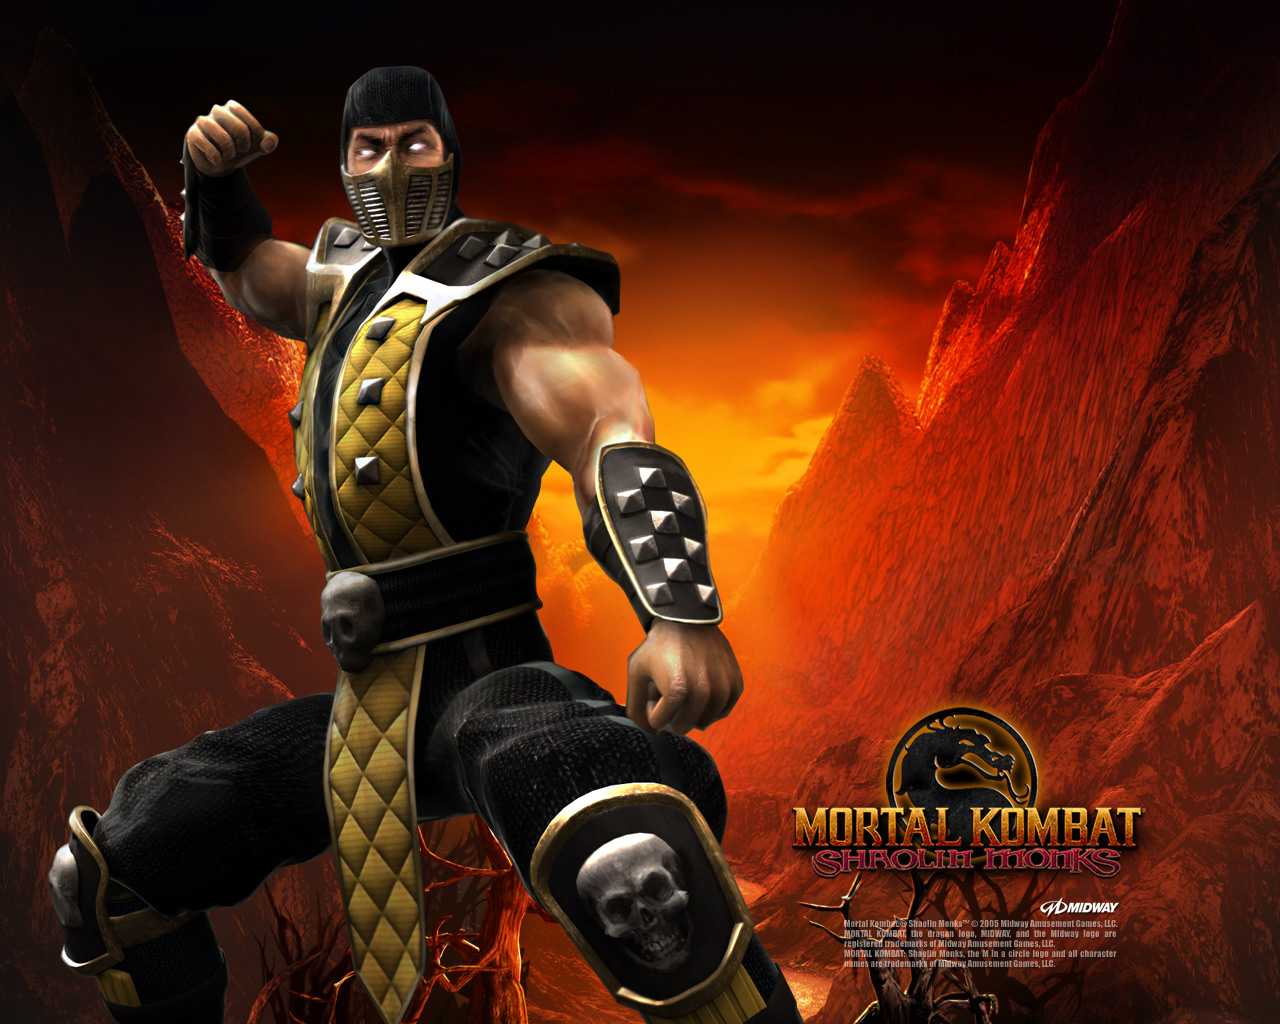 Mortal Kombat 11 - Special Editions [COMPARED]